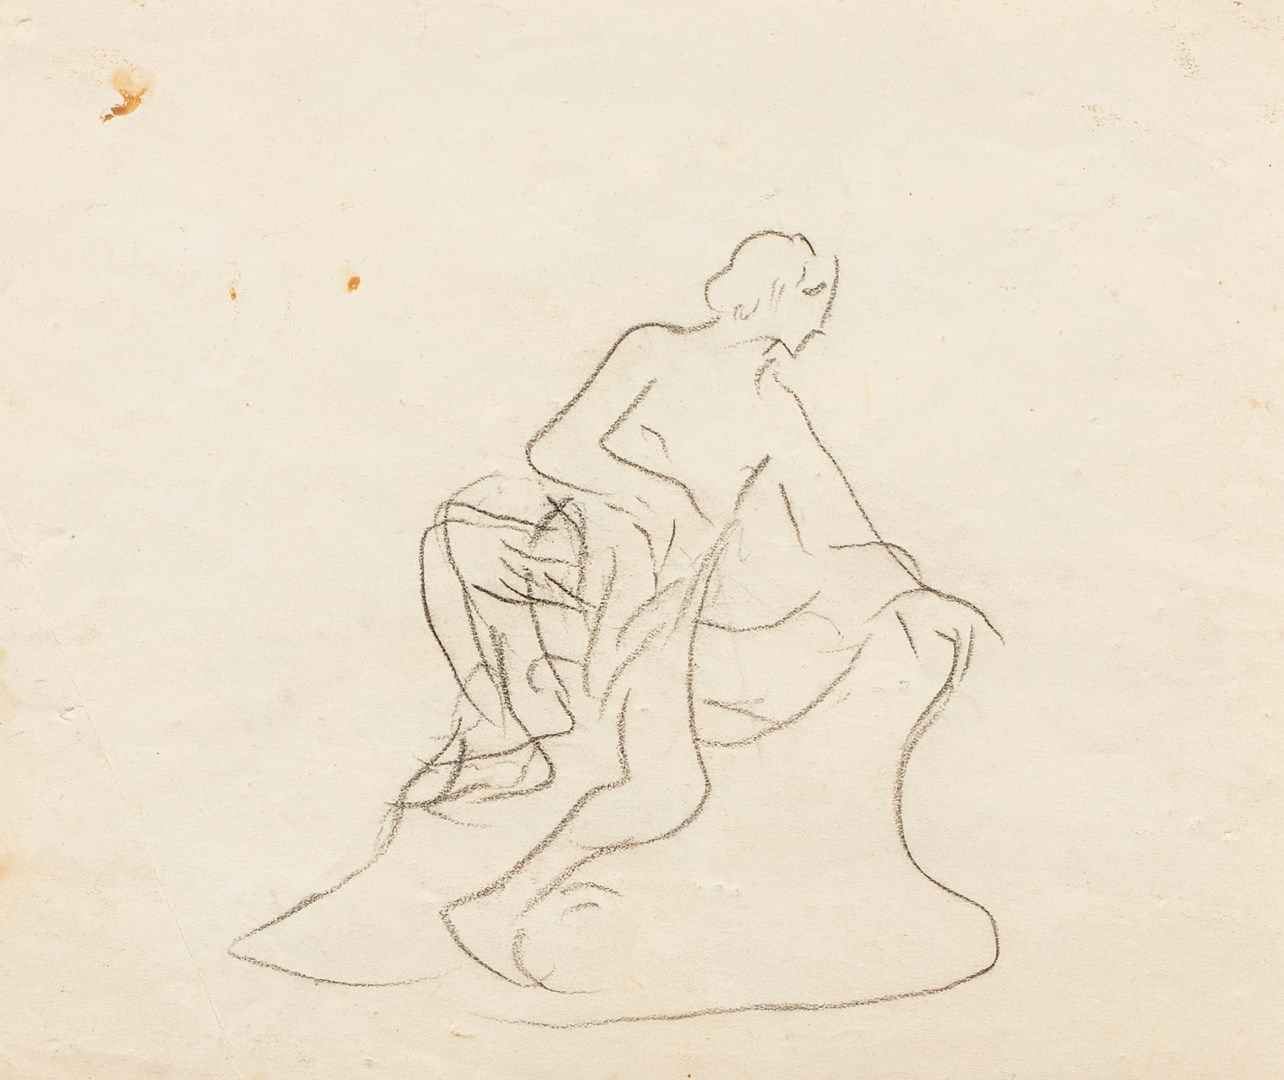 Null 哈勒帕斯-扬努里斯, 1851-1938年

垂头丧气的人物研究

纸上黑铅笔（有折痕，小事故，污渍），无签名，裱框背面有卡尔法扬画廊的标签

20x&hellip;